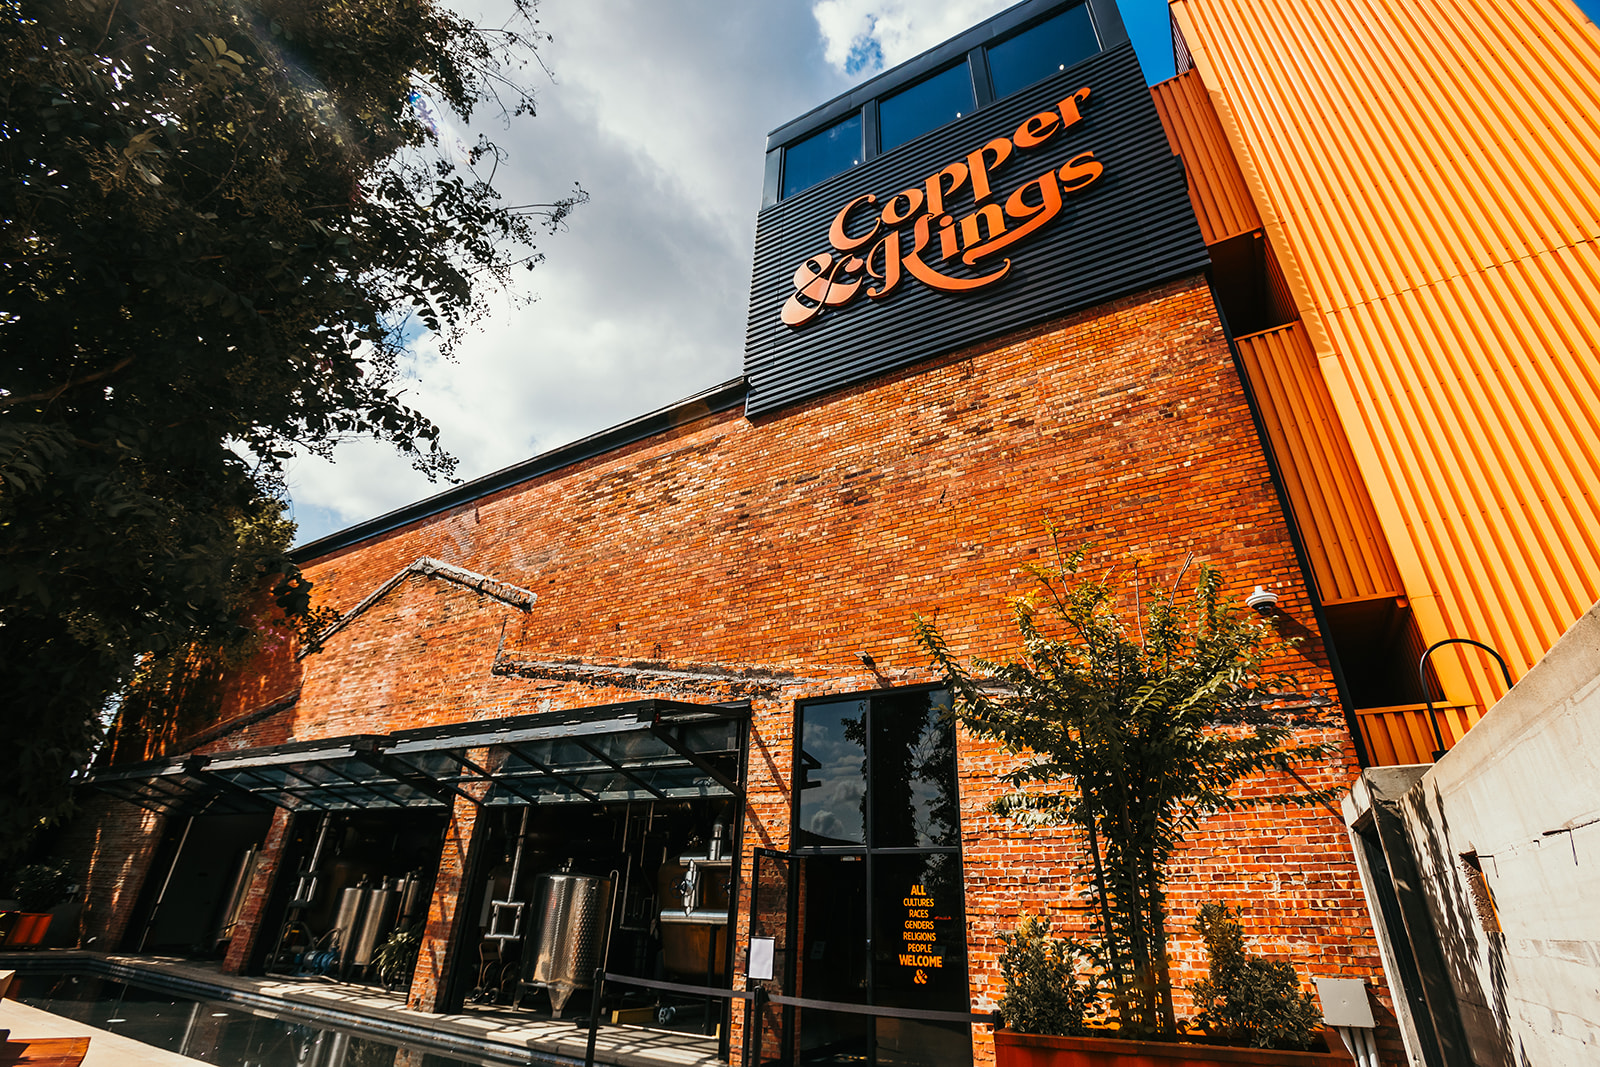 Copper & Kings Rooftop Bar & Restaurant